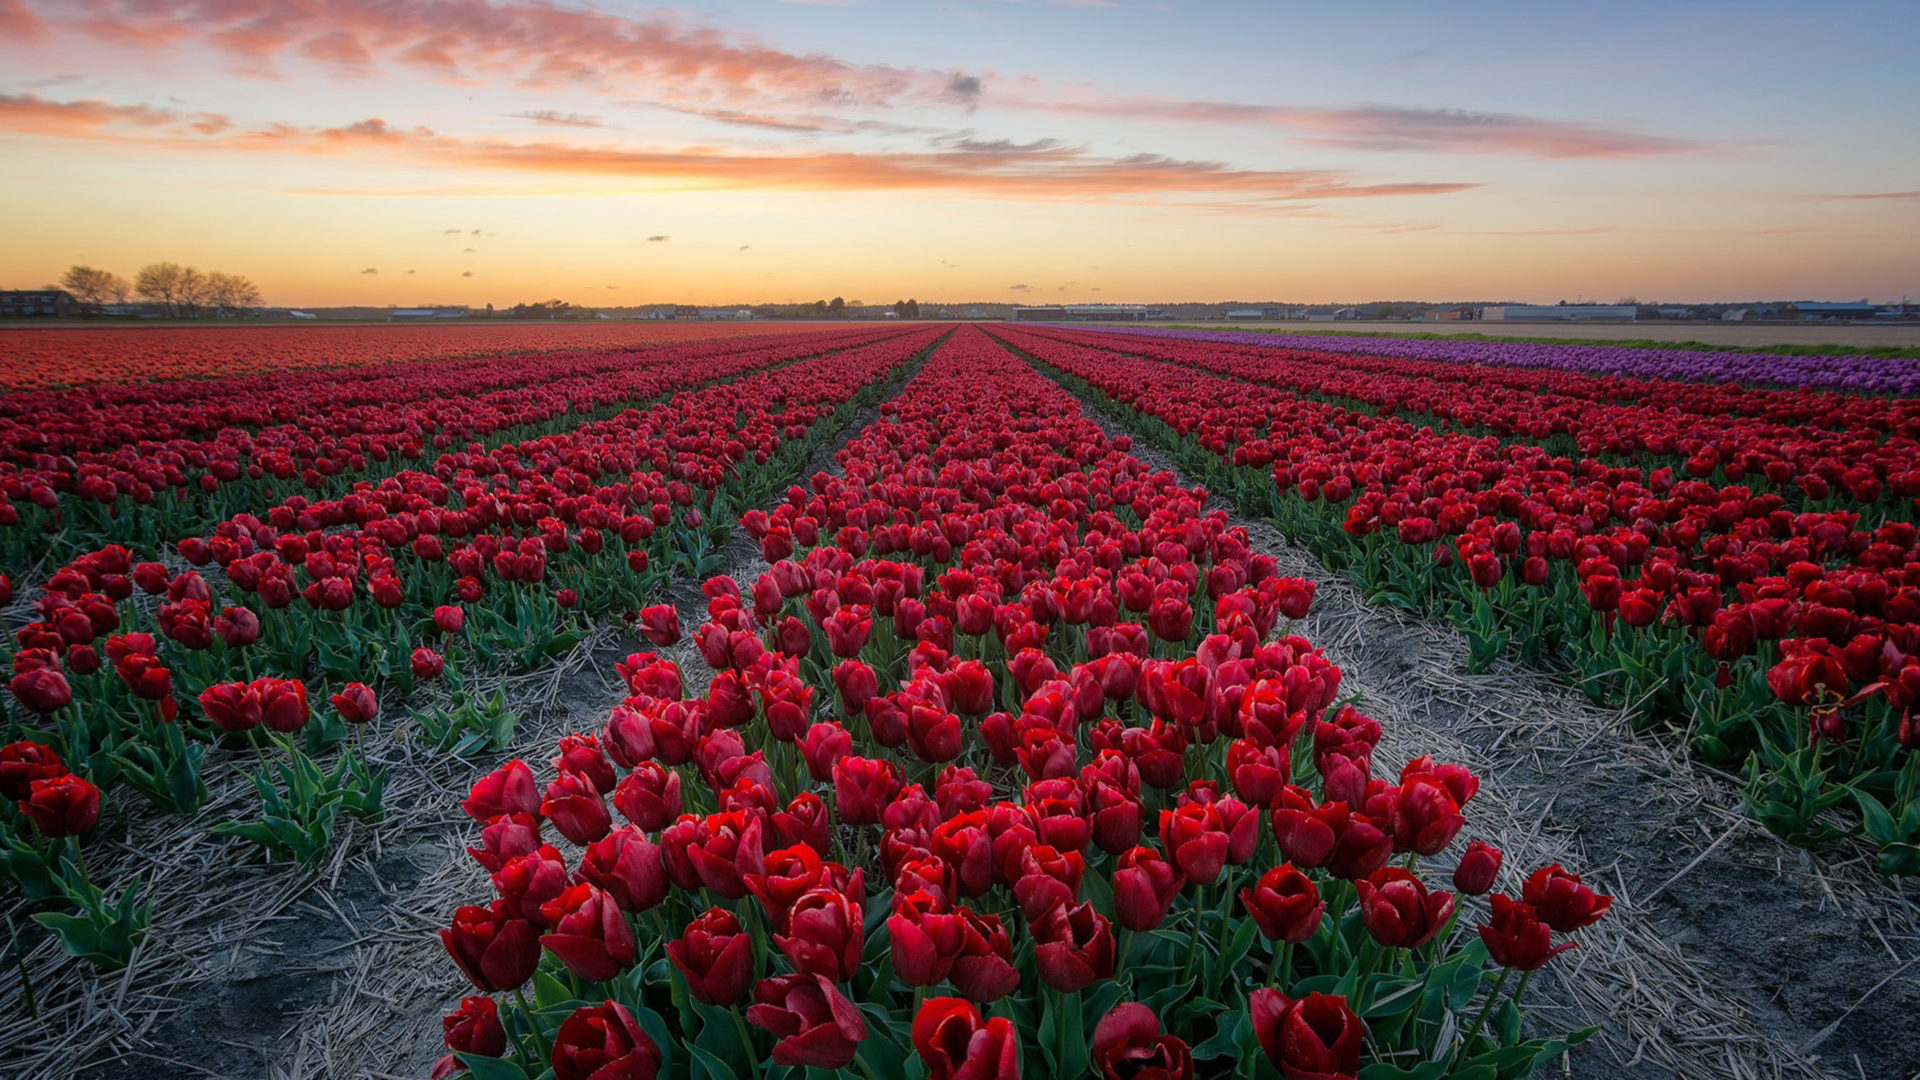 1920x1080 Field With Red Tulips Netherlands 4k Hd Desktop Wallpaper /s/Cinnam